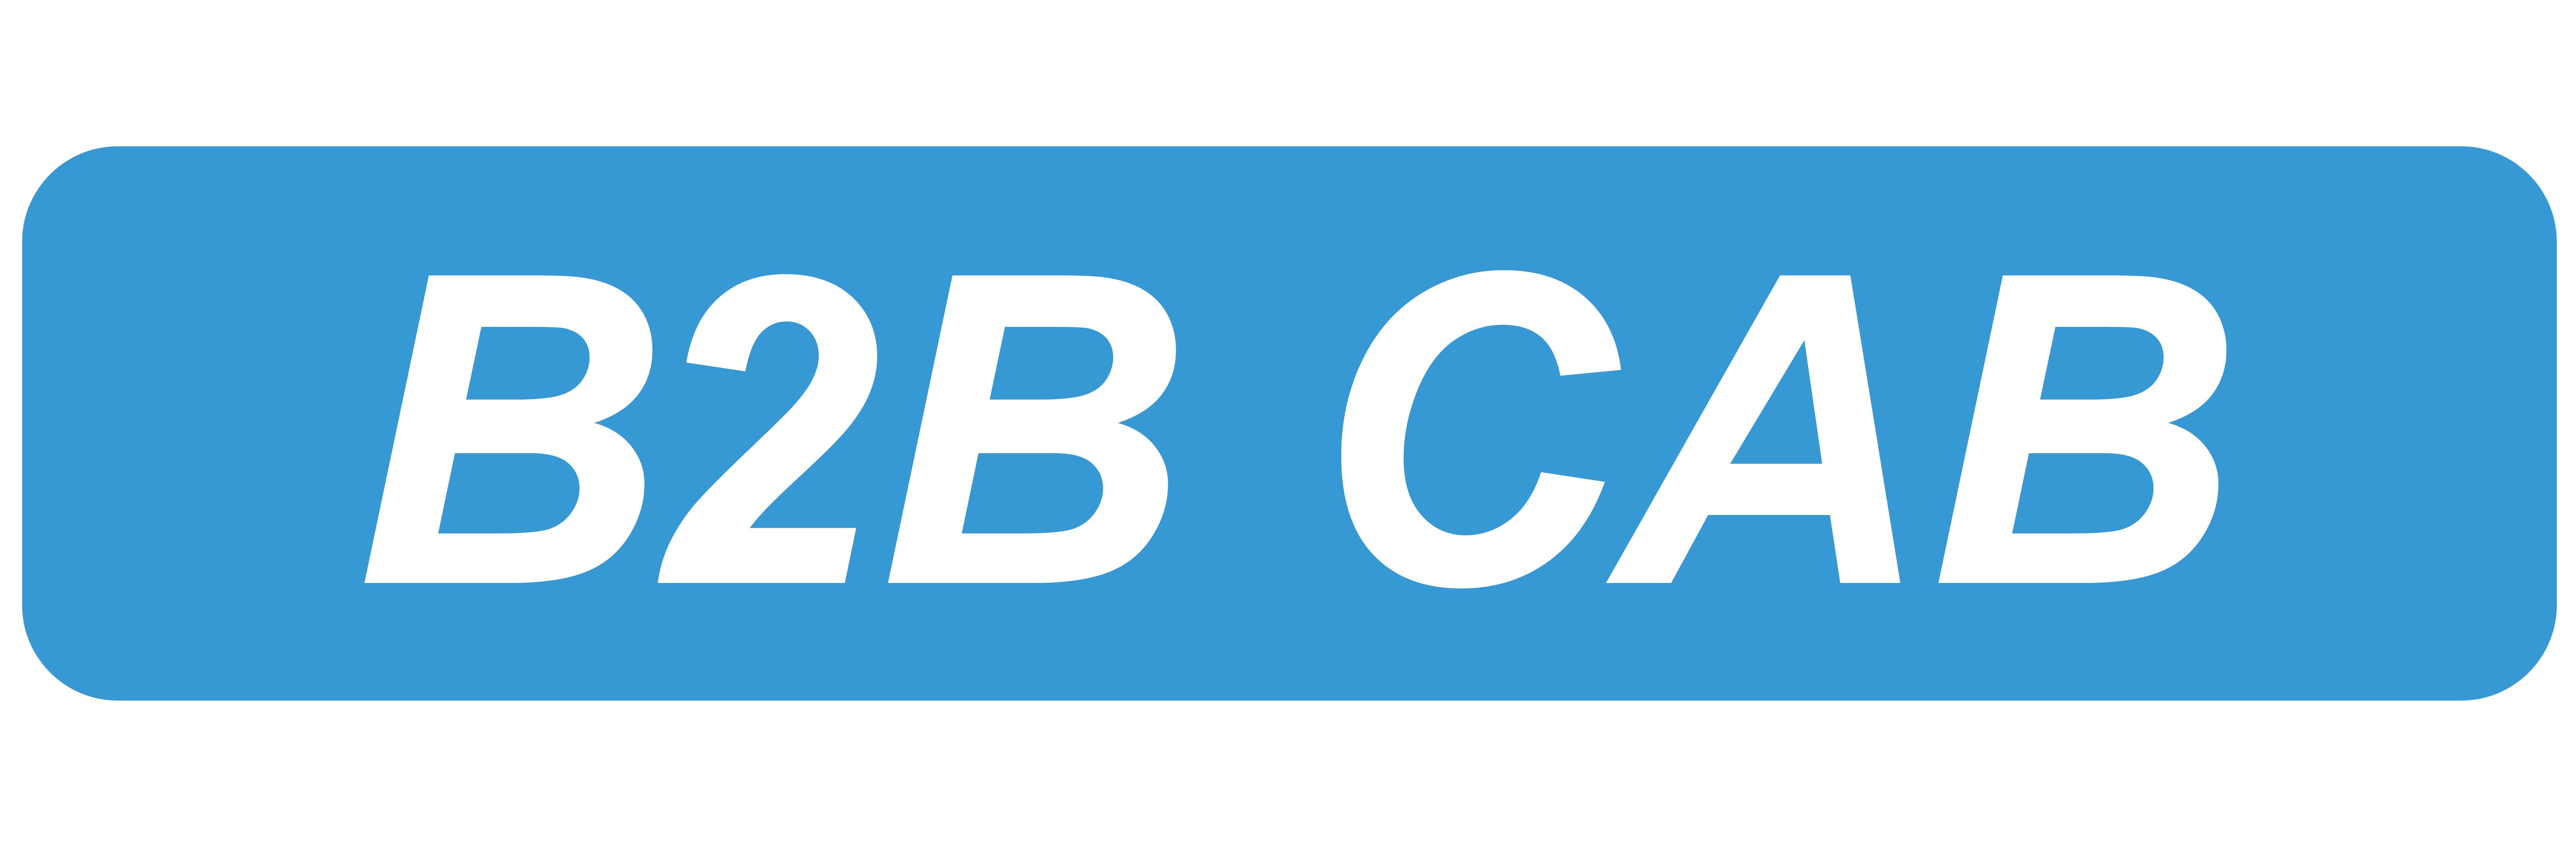 B2b Cab